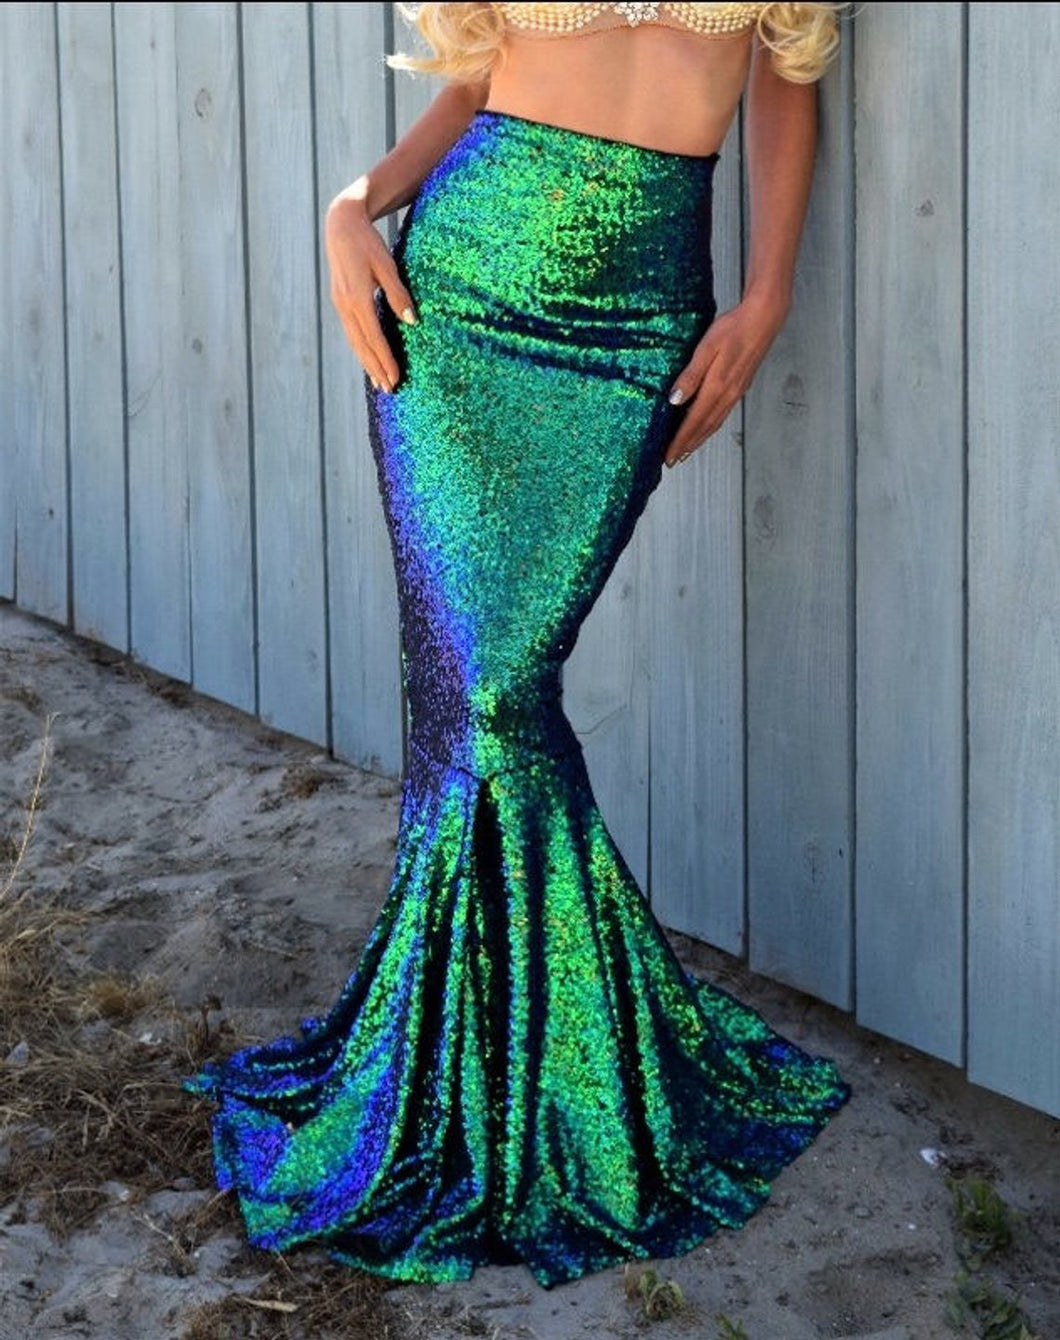 Sequin Mermaid Tail Skirt Green High Waist Sexy Adult Mermaid Costume